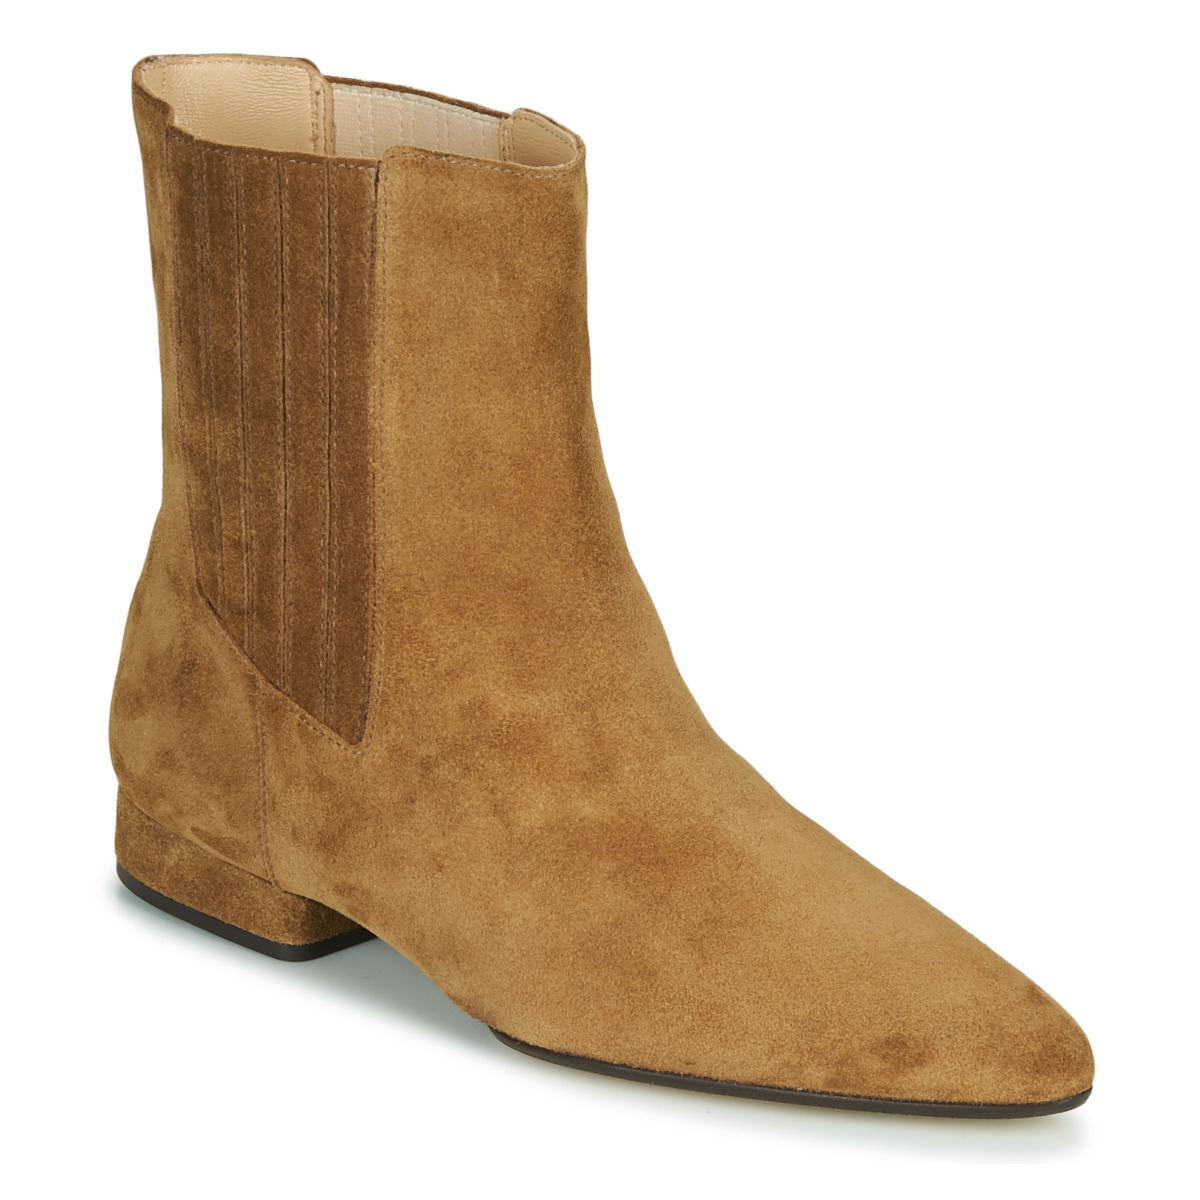 Chaussures Femme verdi Boots Kenzo K LINE SOFT Camel